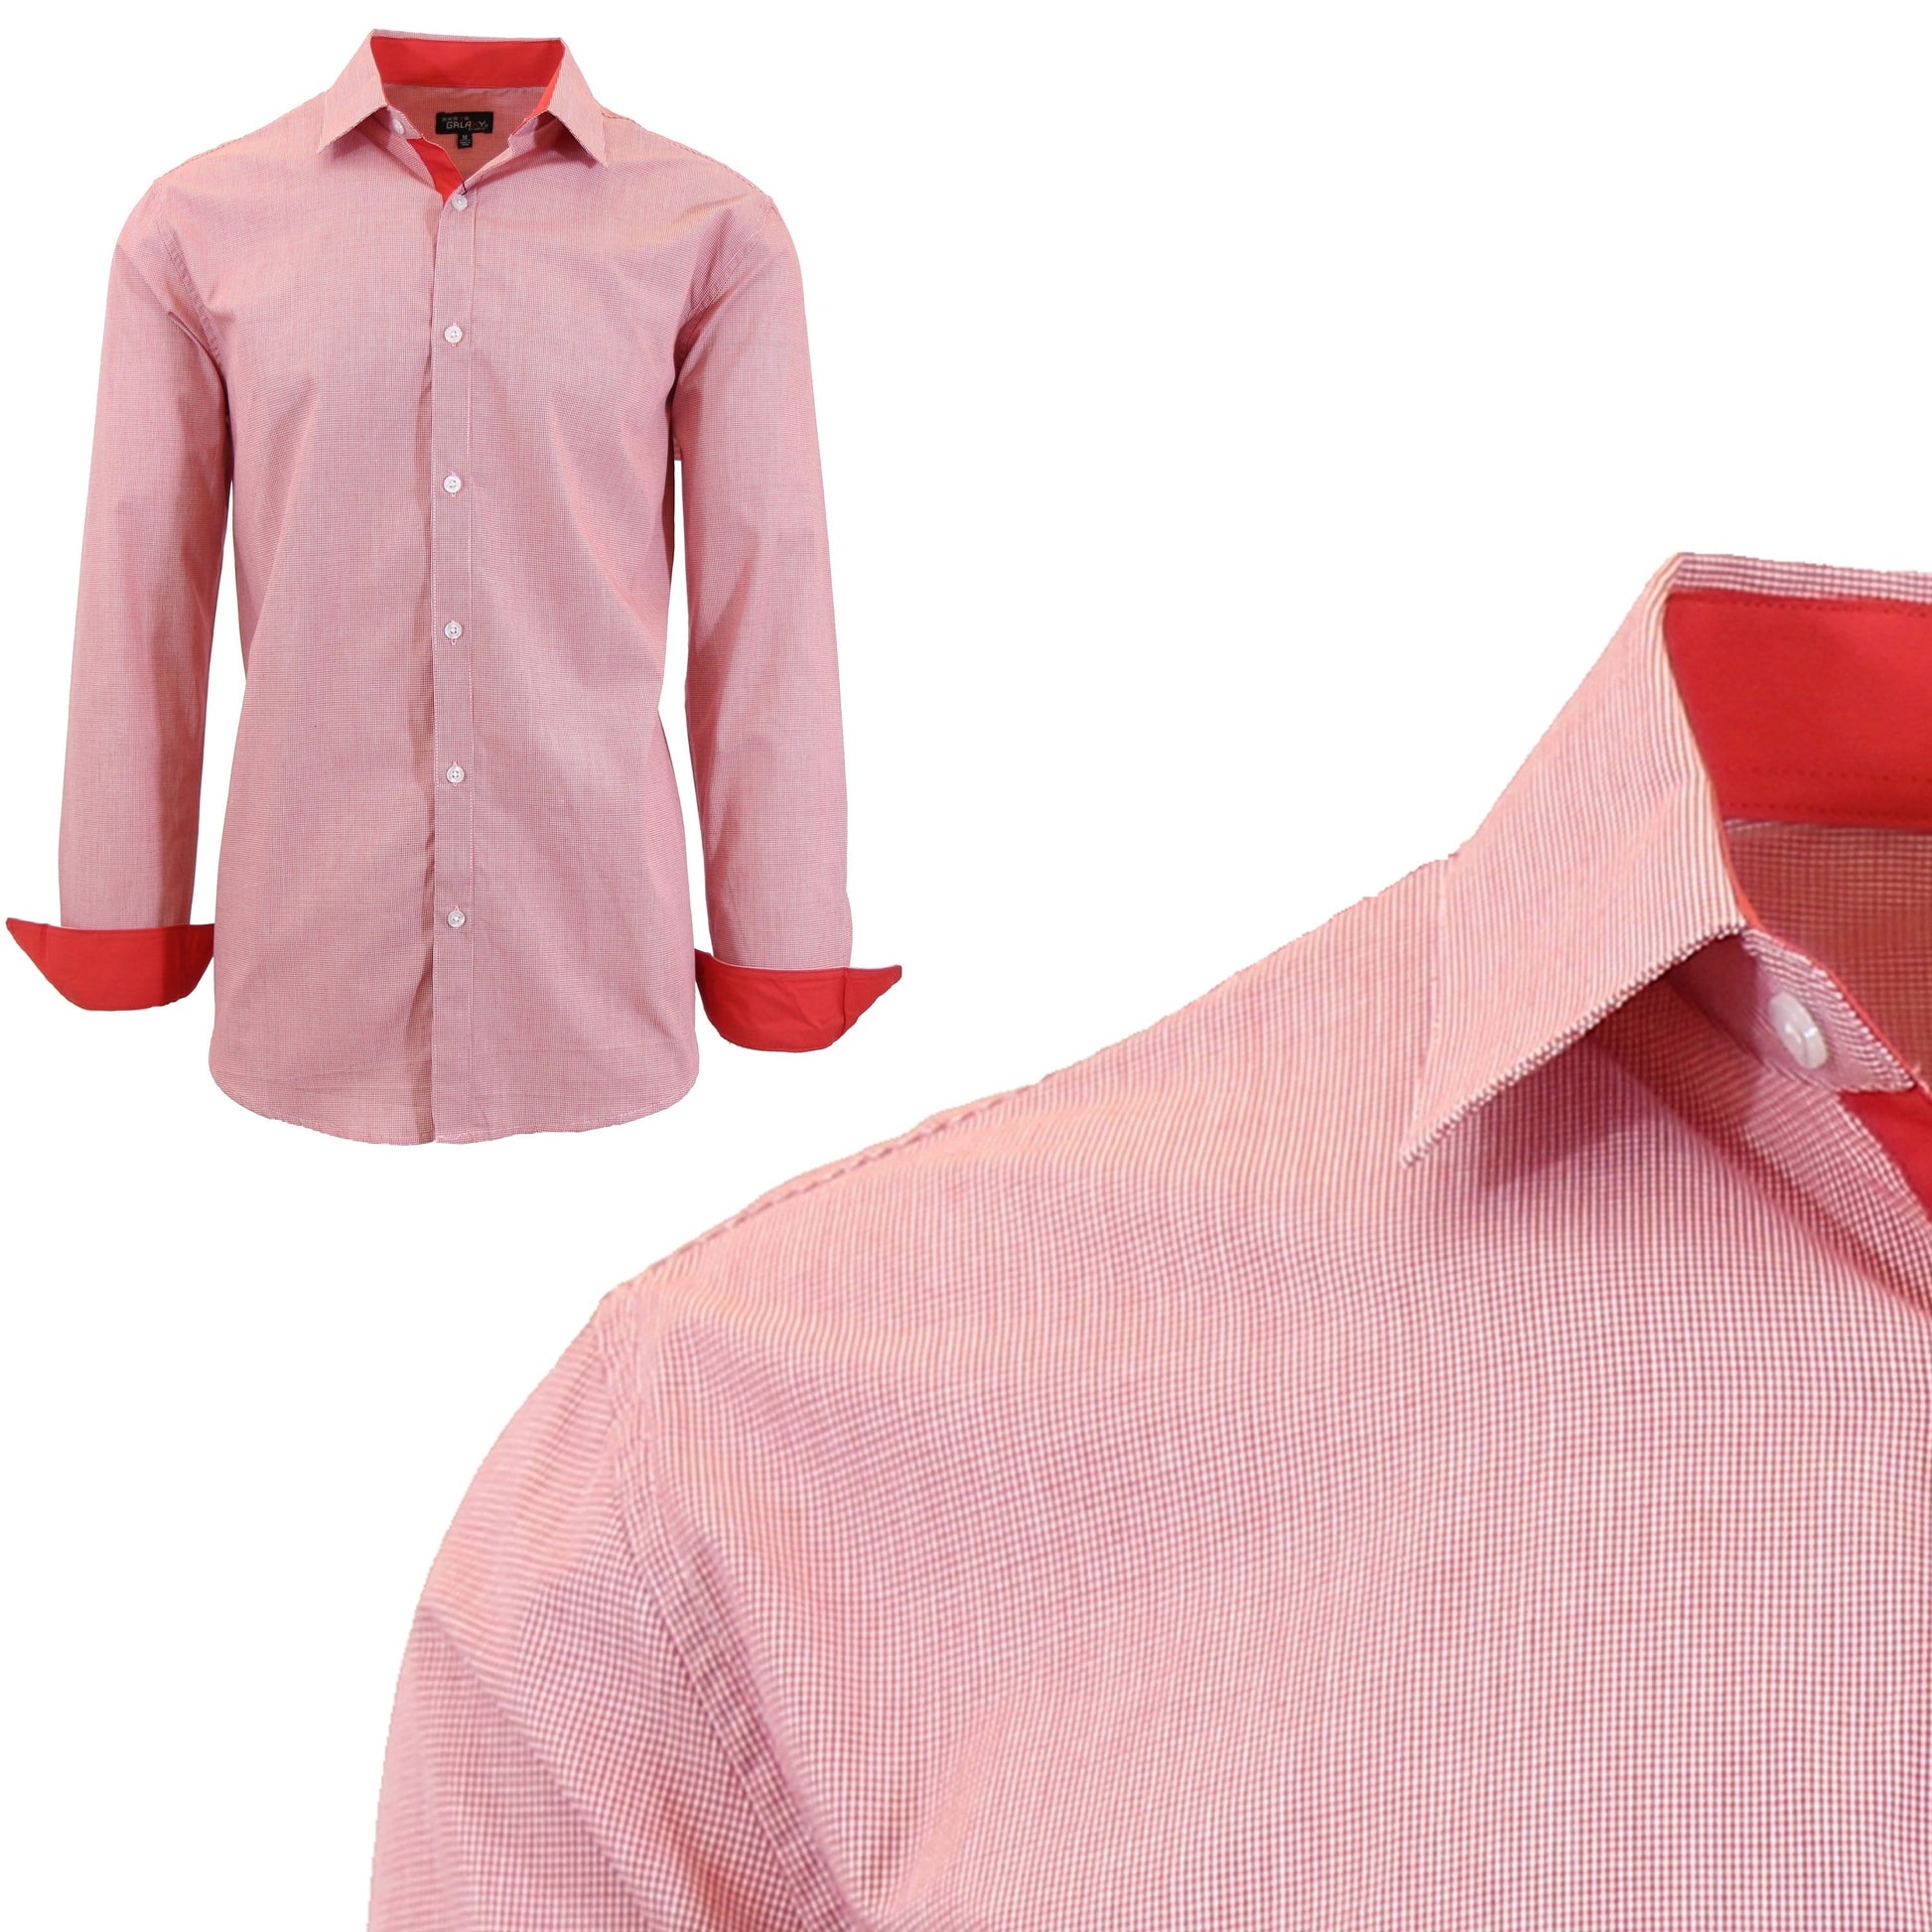 Men's Long Sleeve Cotton Dress Shirts - GalaxybyHarvic